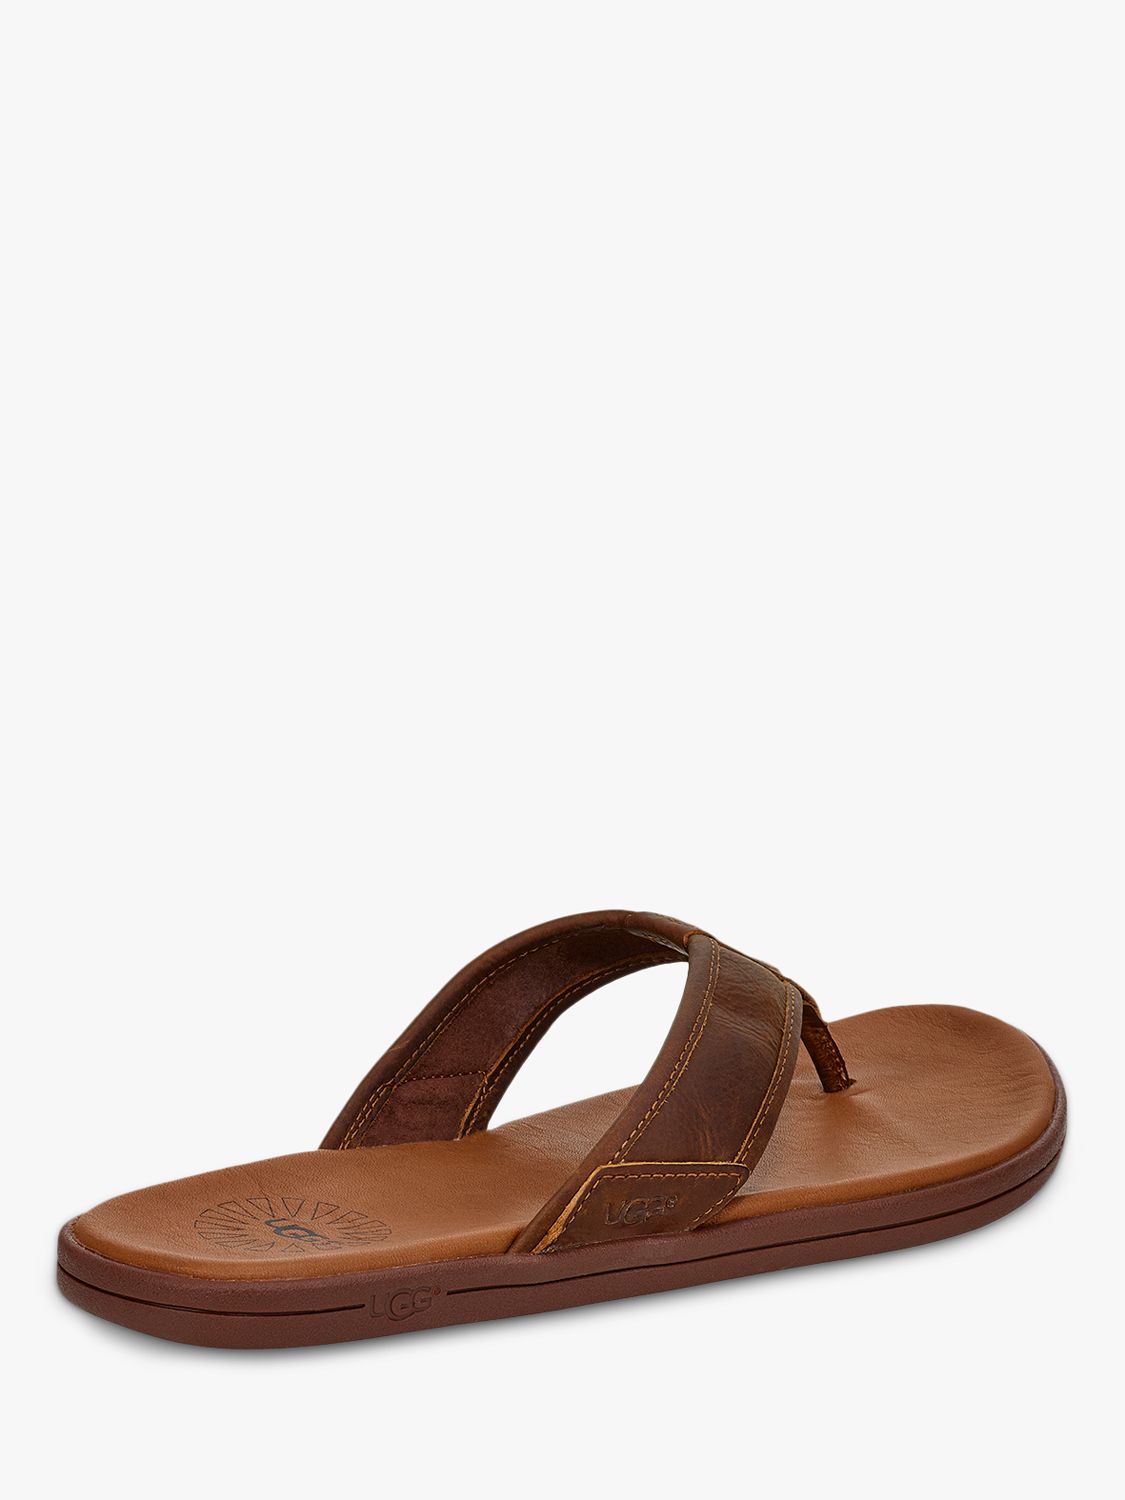 UGG Seaside Leather Flip Flops, Tan, 7